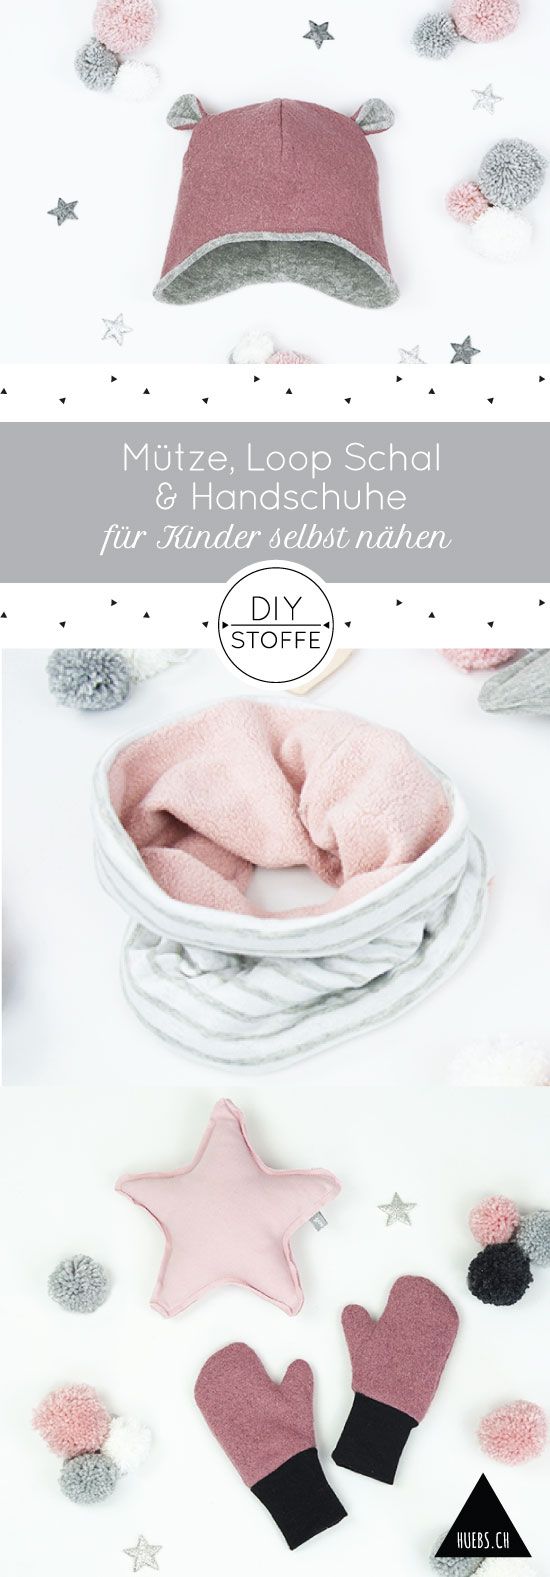 Handschuhe-fuer-Babys-Kinder-Anleitung-und-Schnittmuster.jpg